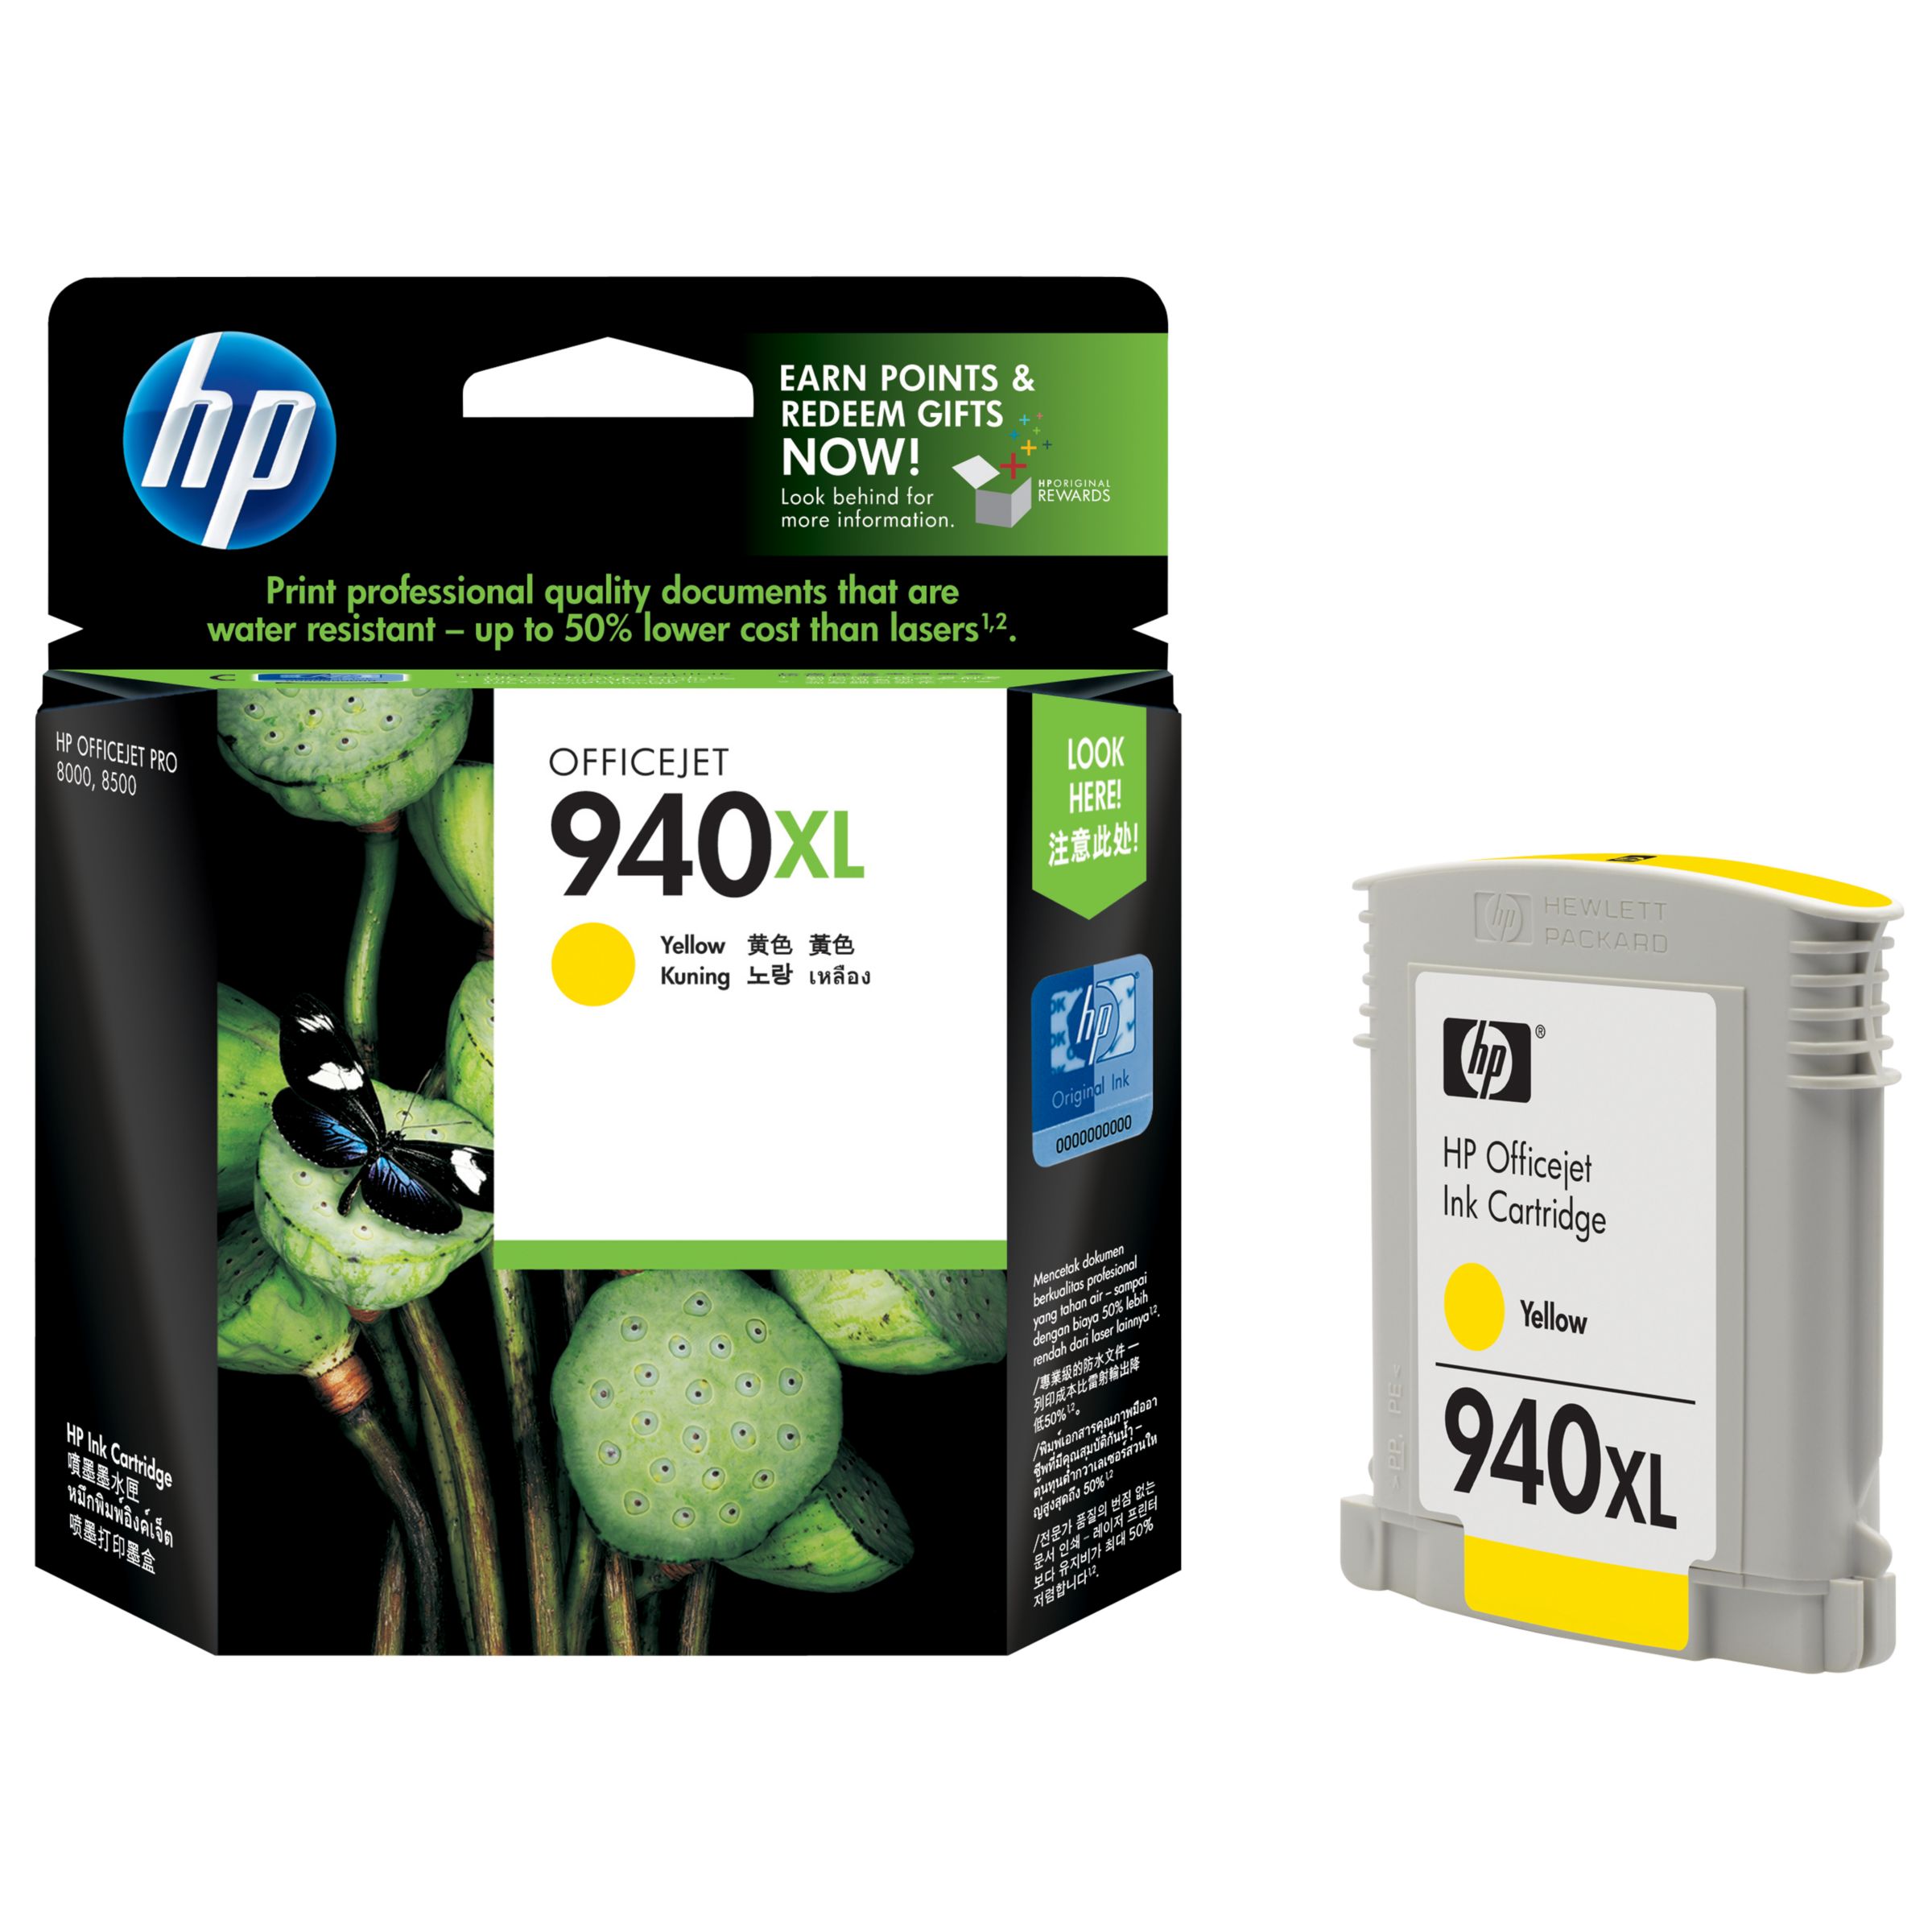 HP 940XL Officejet Printer Cartridge, Yellow,